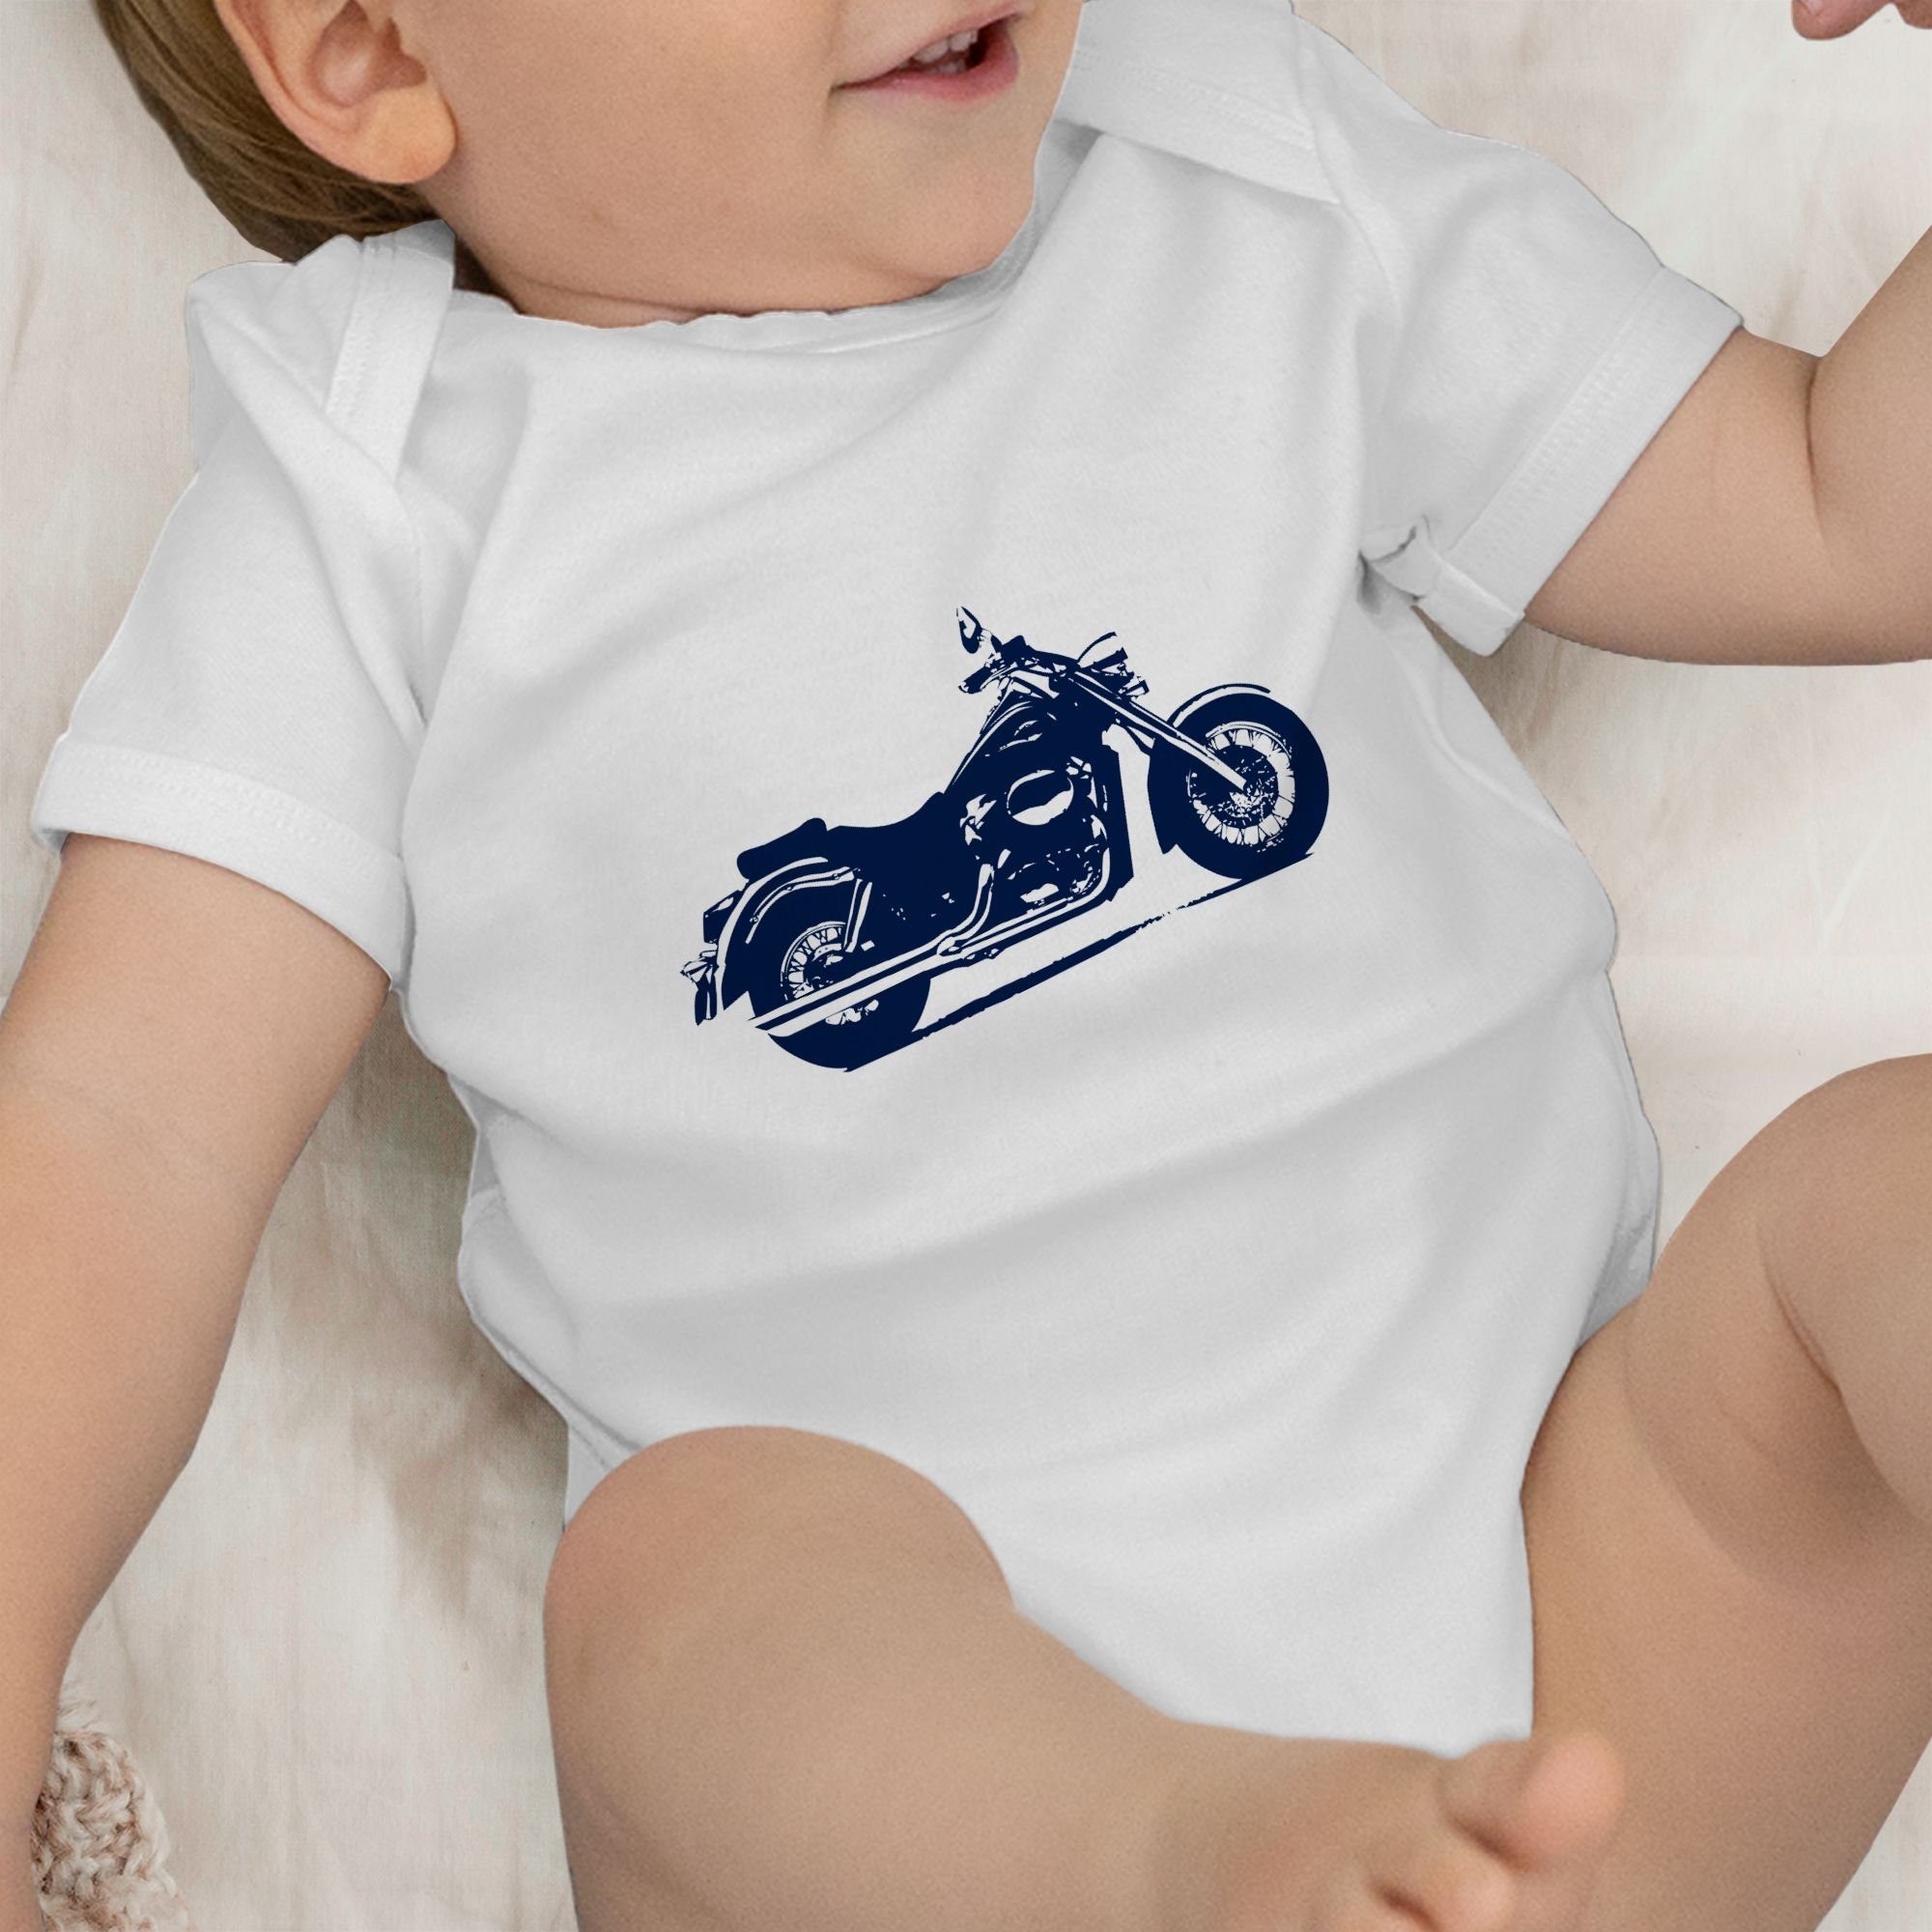 Weiß Traktor Motorrad Shirtbody 1 Baby Co. und Shirtracer Bagger